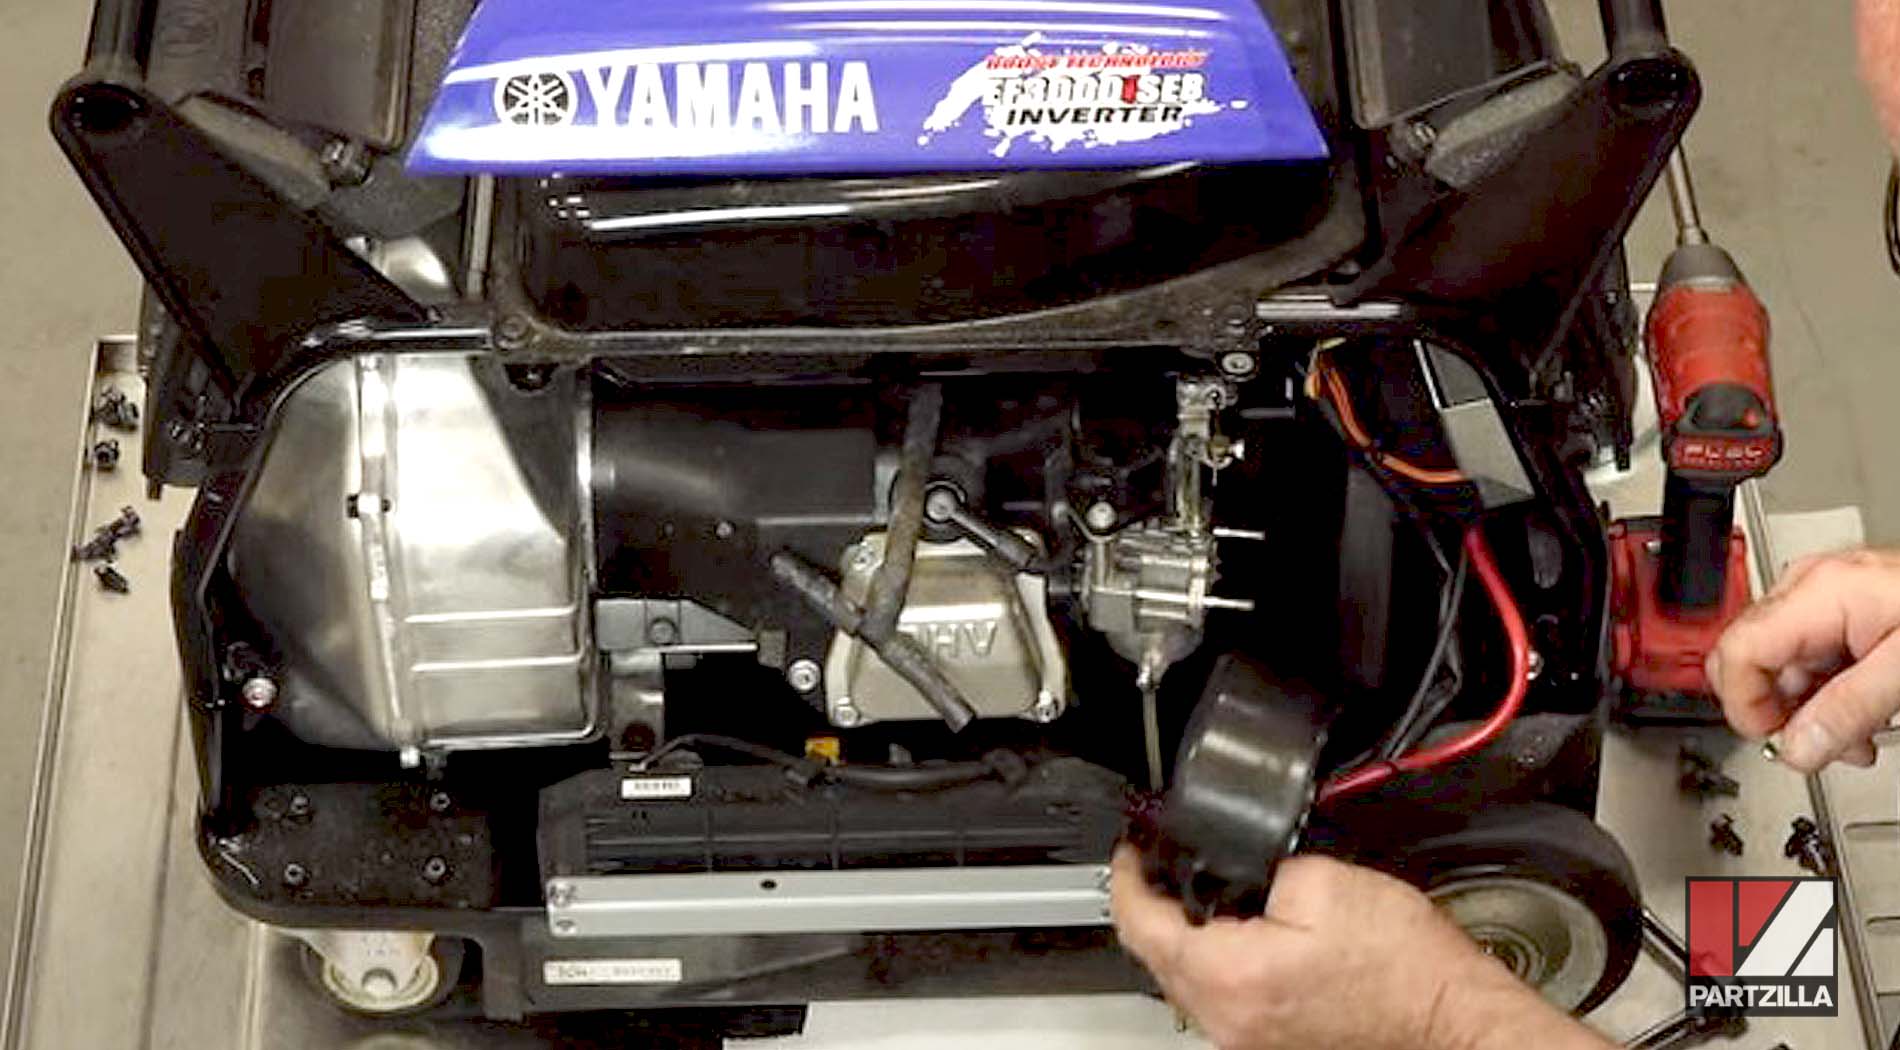 How to remove Yamaha generator carb